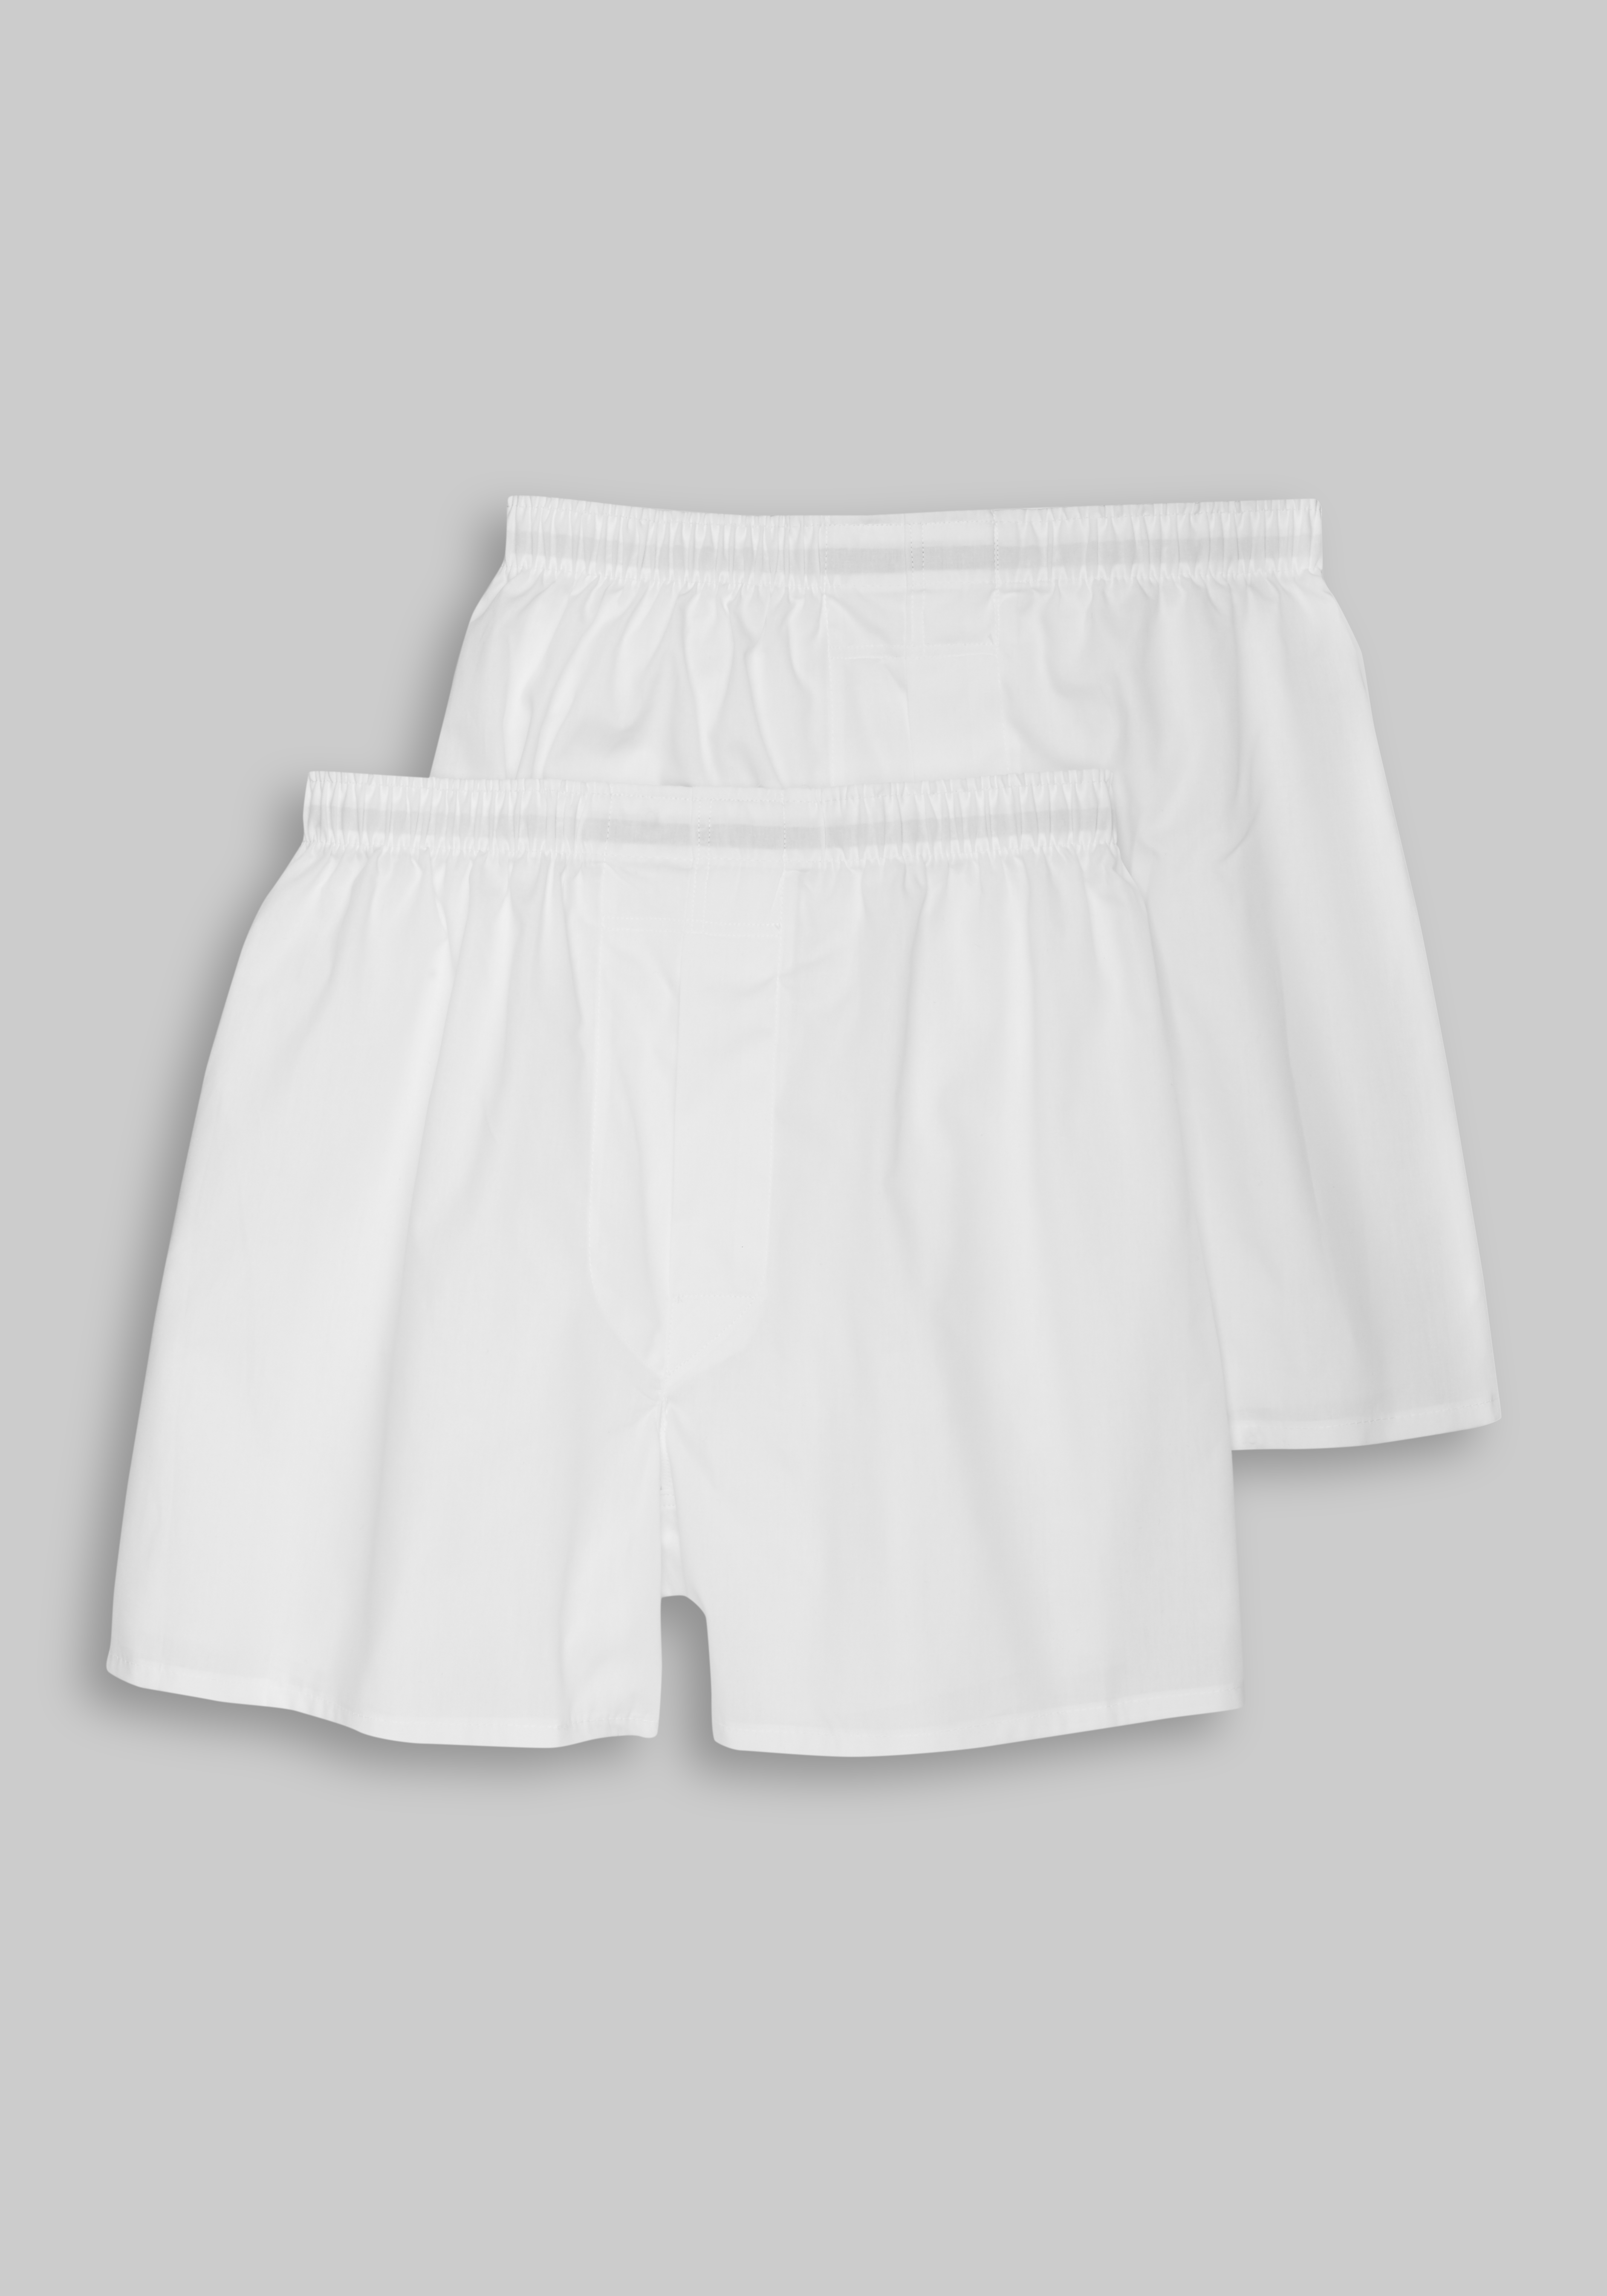 XLLX Women's Cotton Underwear High Waist Stretch Briefs Soft Underpants  Breathable Ladies Panties 5 Pack : : Clothing, Shoes & Accessories